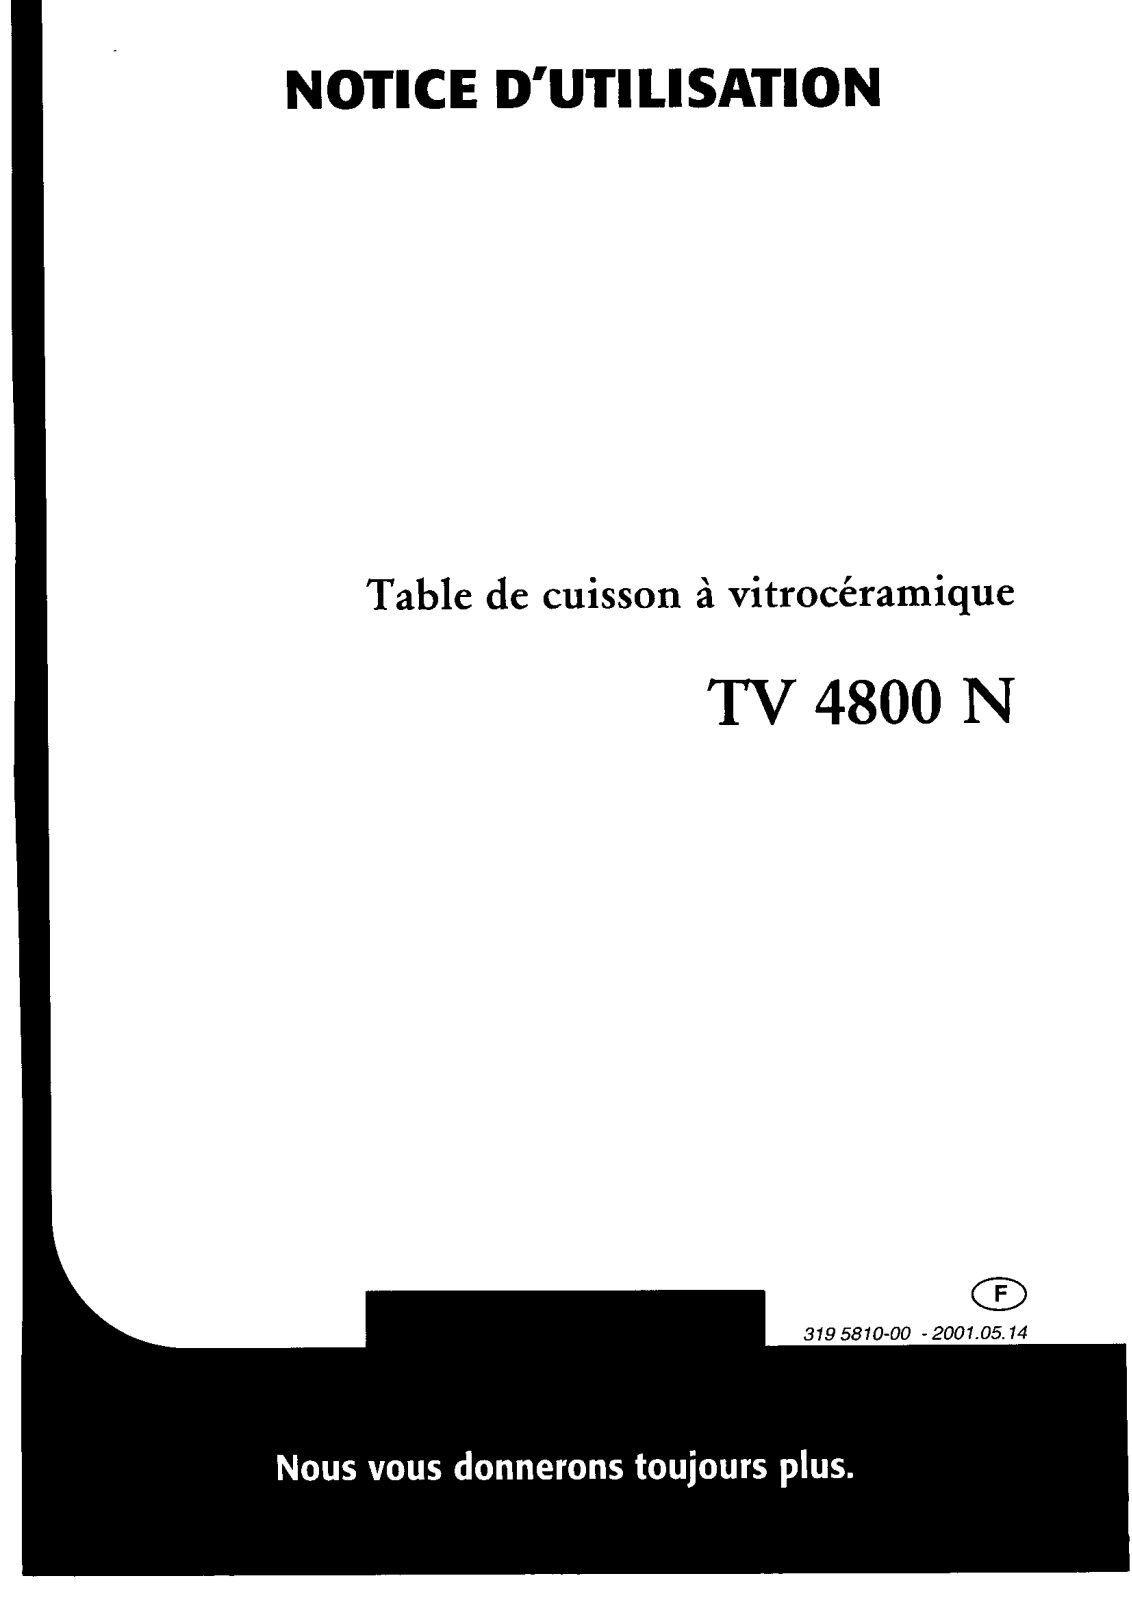 Arthur martin TV4800N User Manual